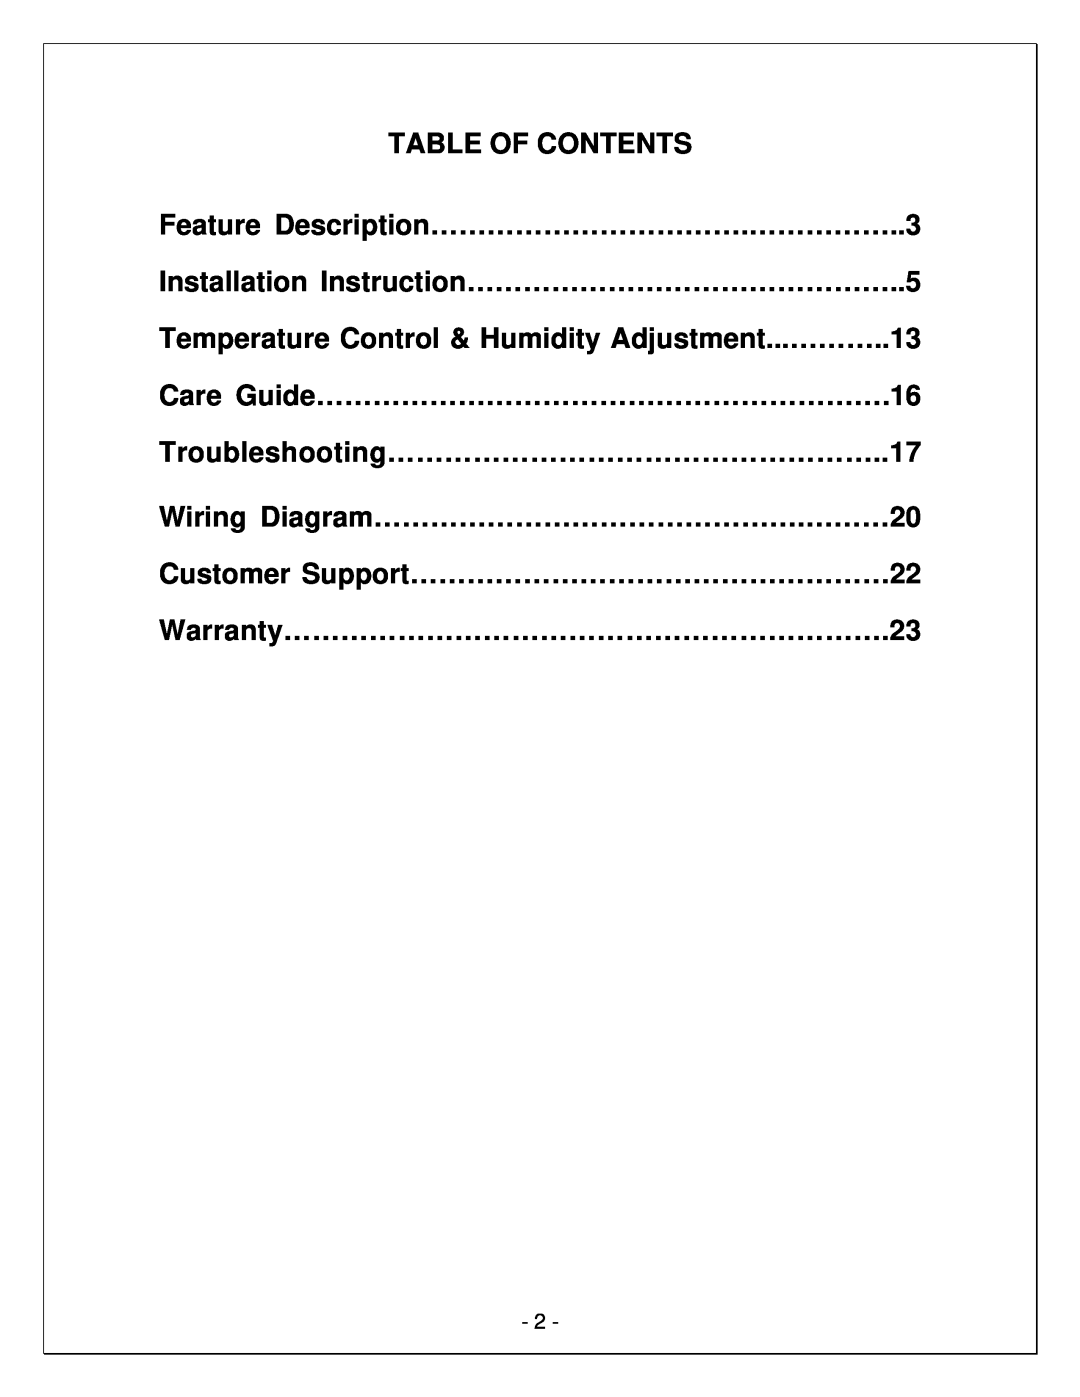 Vinotemp VINO3500HZD manual Table Of Contents, Feature Description…………………………….……………..3, Care Guide…………………………………………………….16 